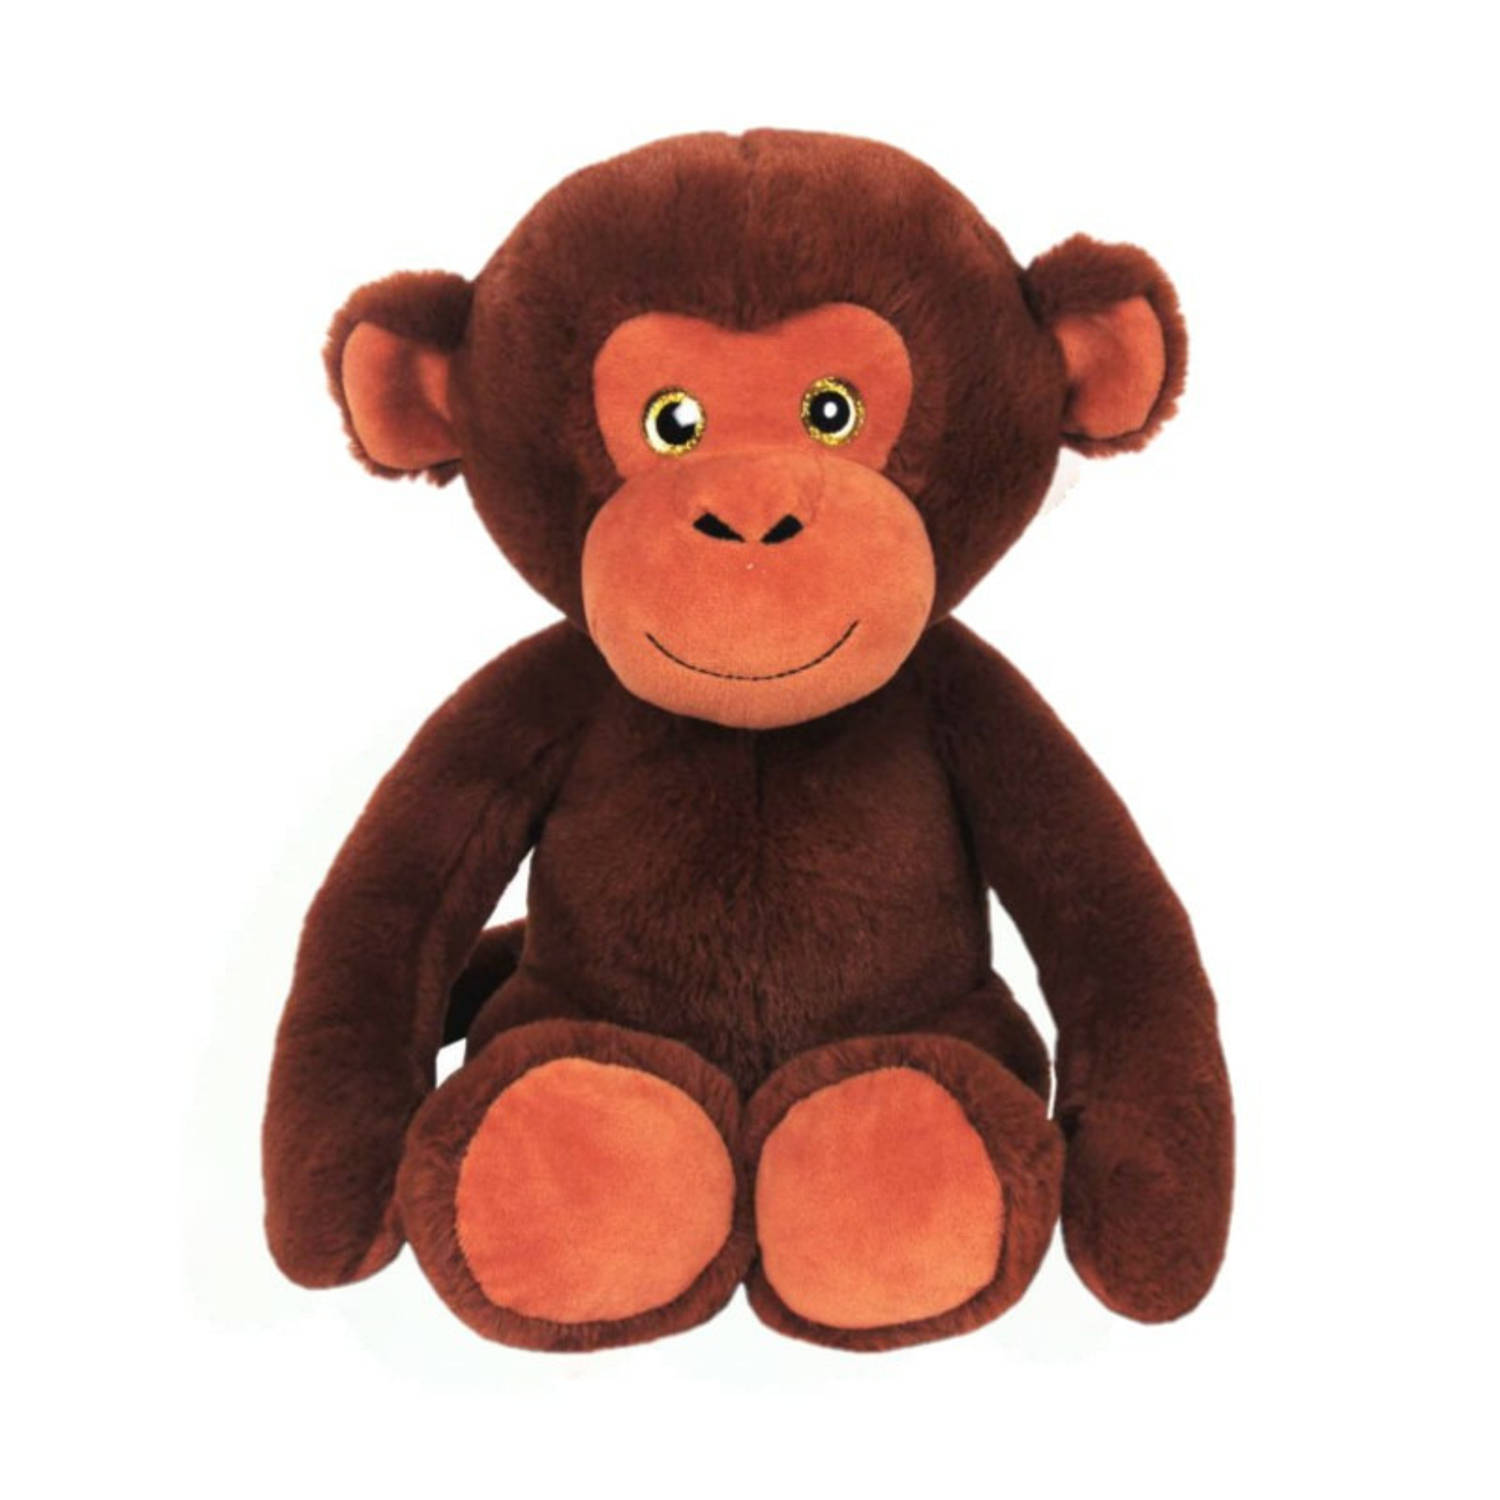 Pluche speelgoed knuffeldier Chimpansee aap van 28 cm - Knuffeldier